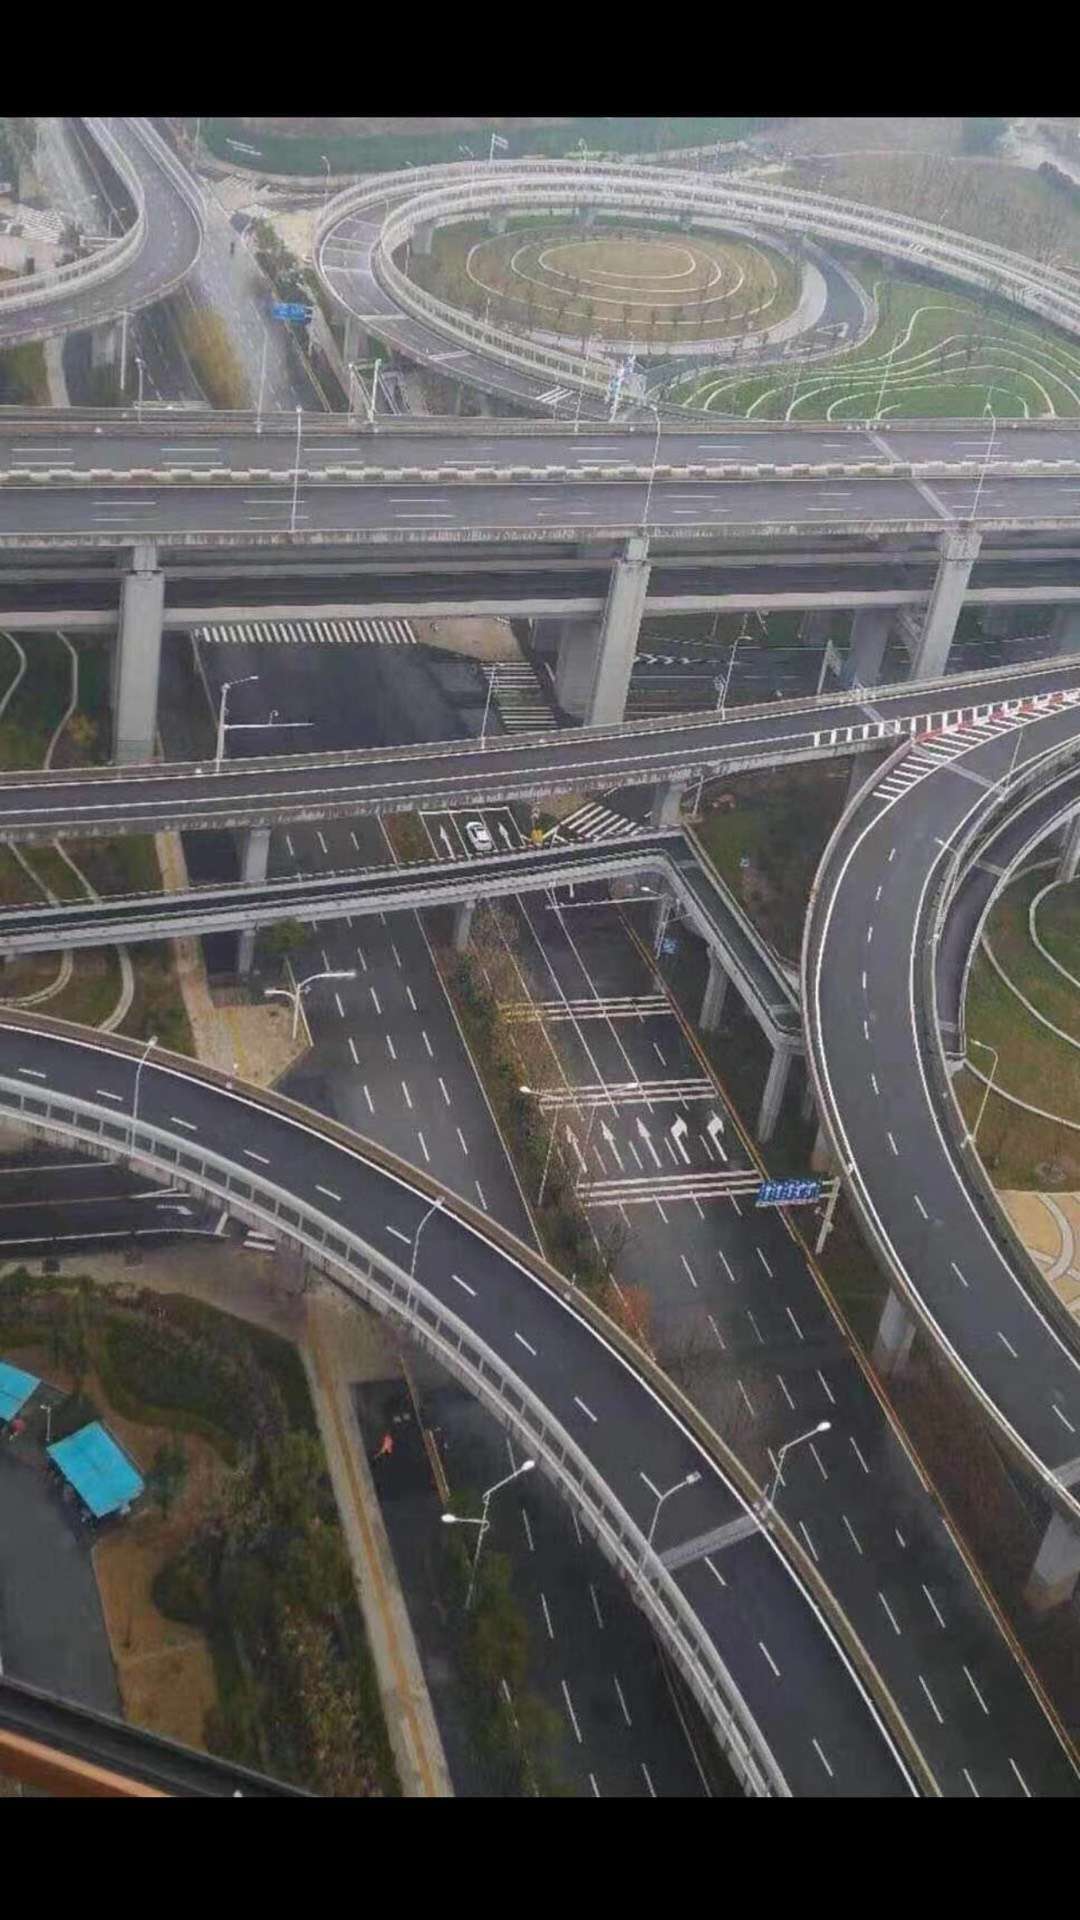 تويتر 看天下على تويتر 1400万人的武汉市长江大桥 巨大的立交上只找到一辆车影 连上海南京路都空无一人 这种珍贵的照片以后拍不到了 永远也拍不到了 T Co V3sgsdf6wy